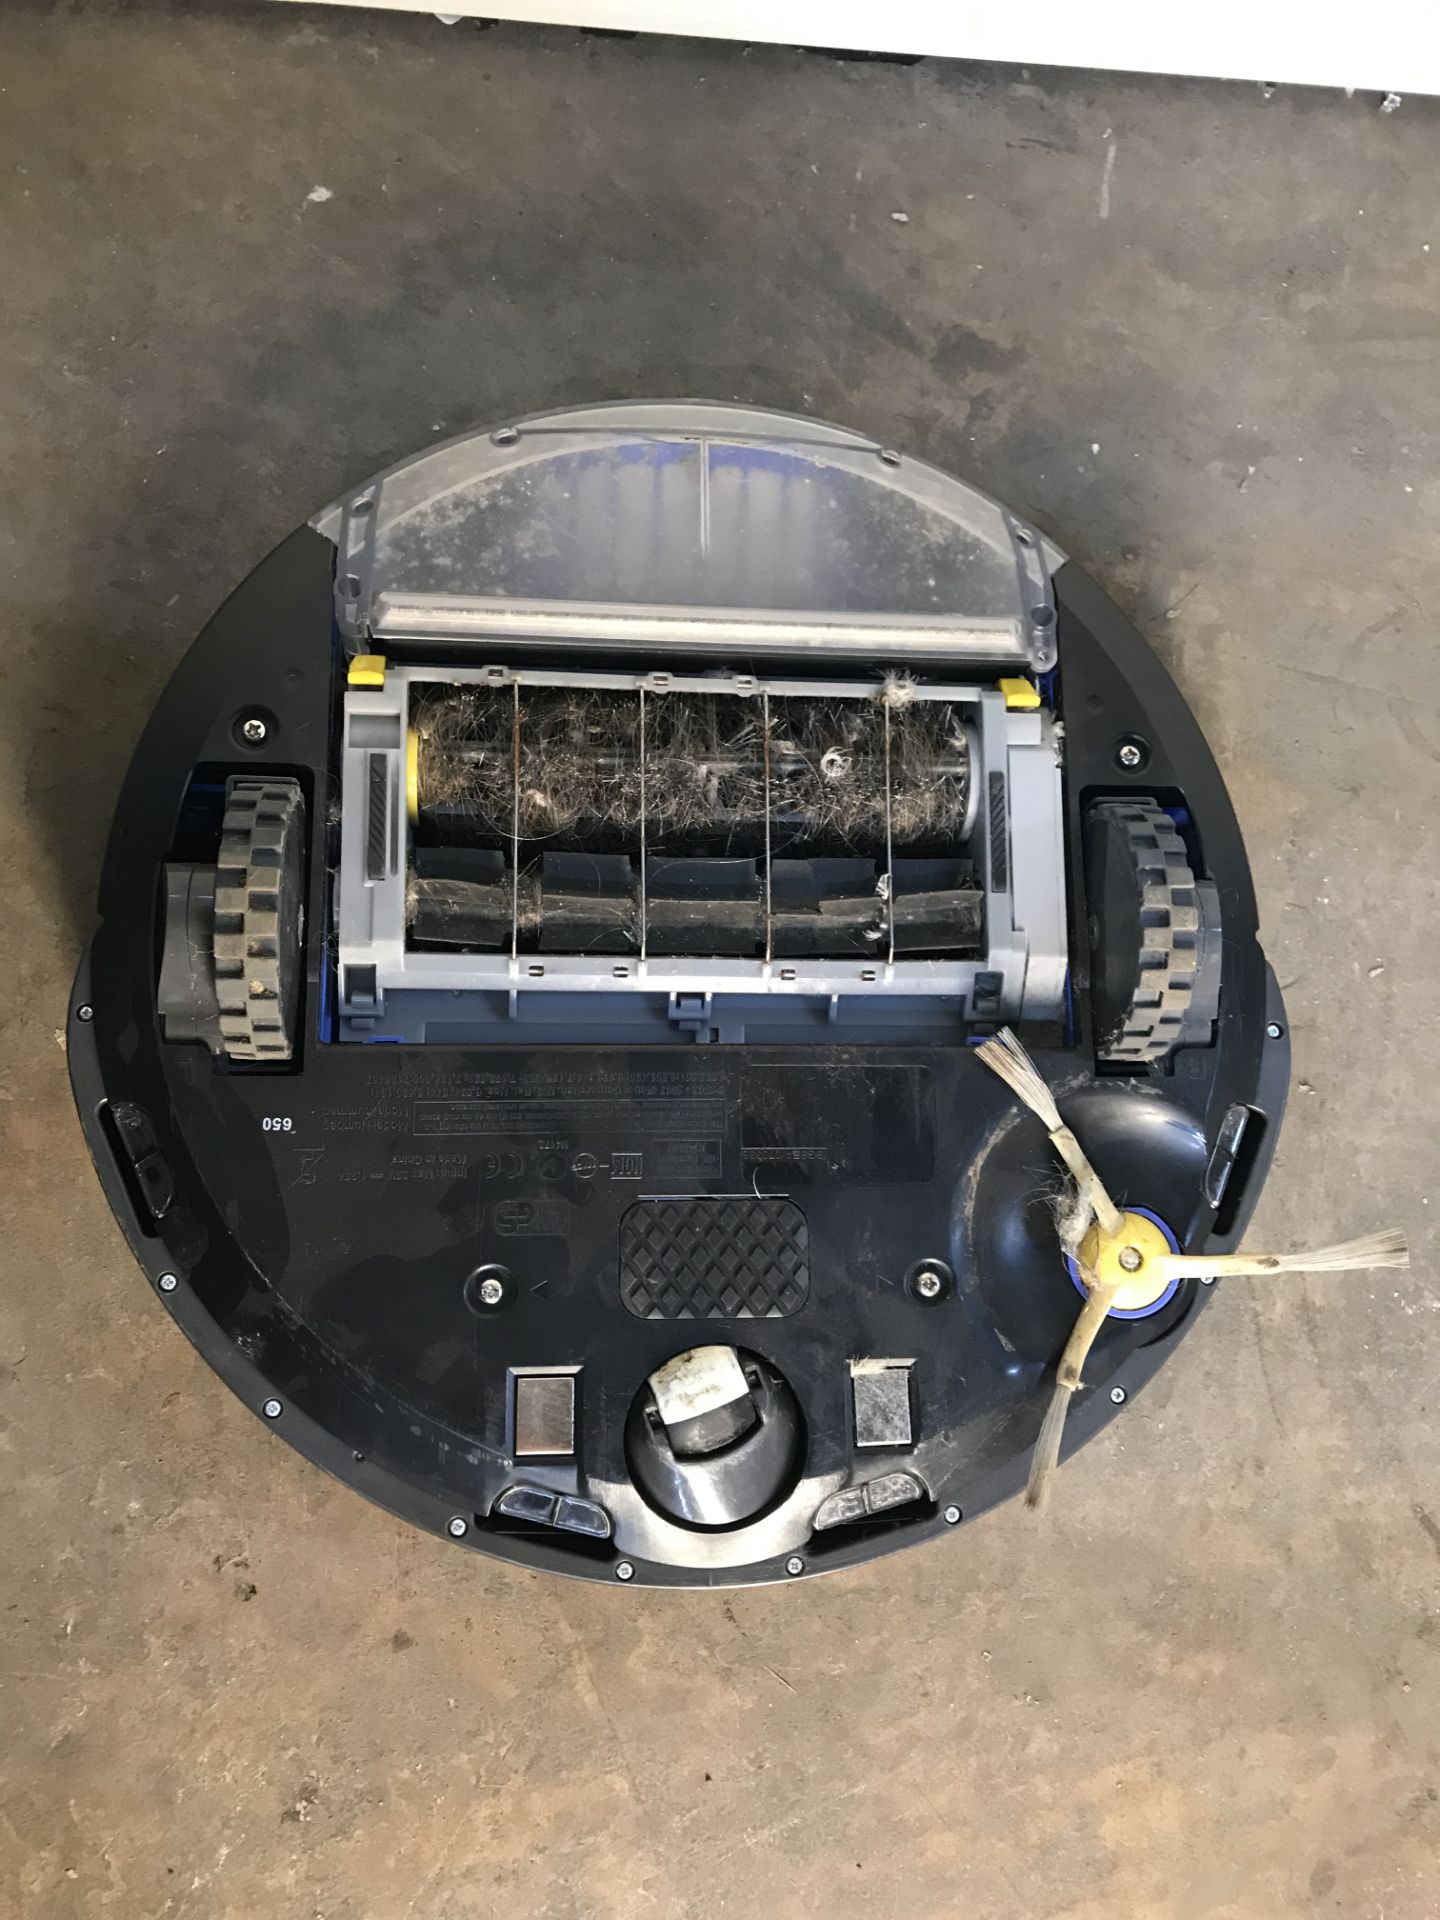 iRobot Roomba - Image 4 of 5